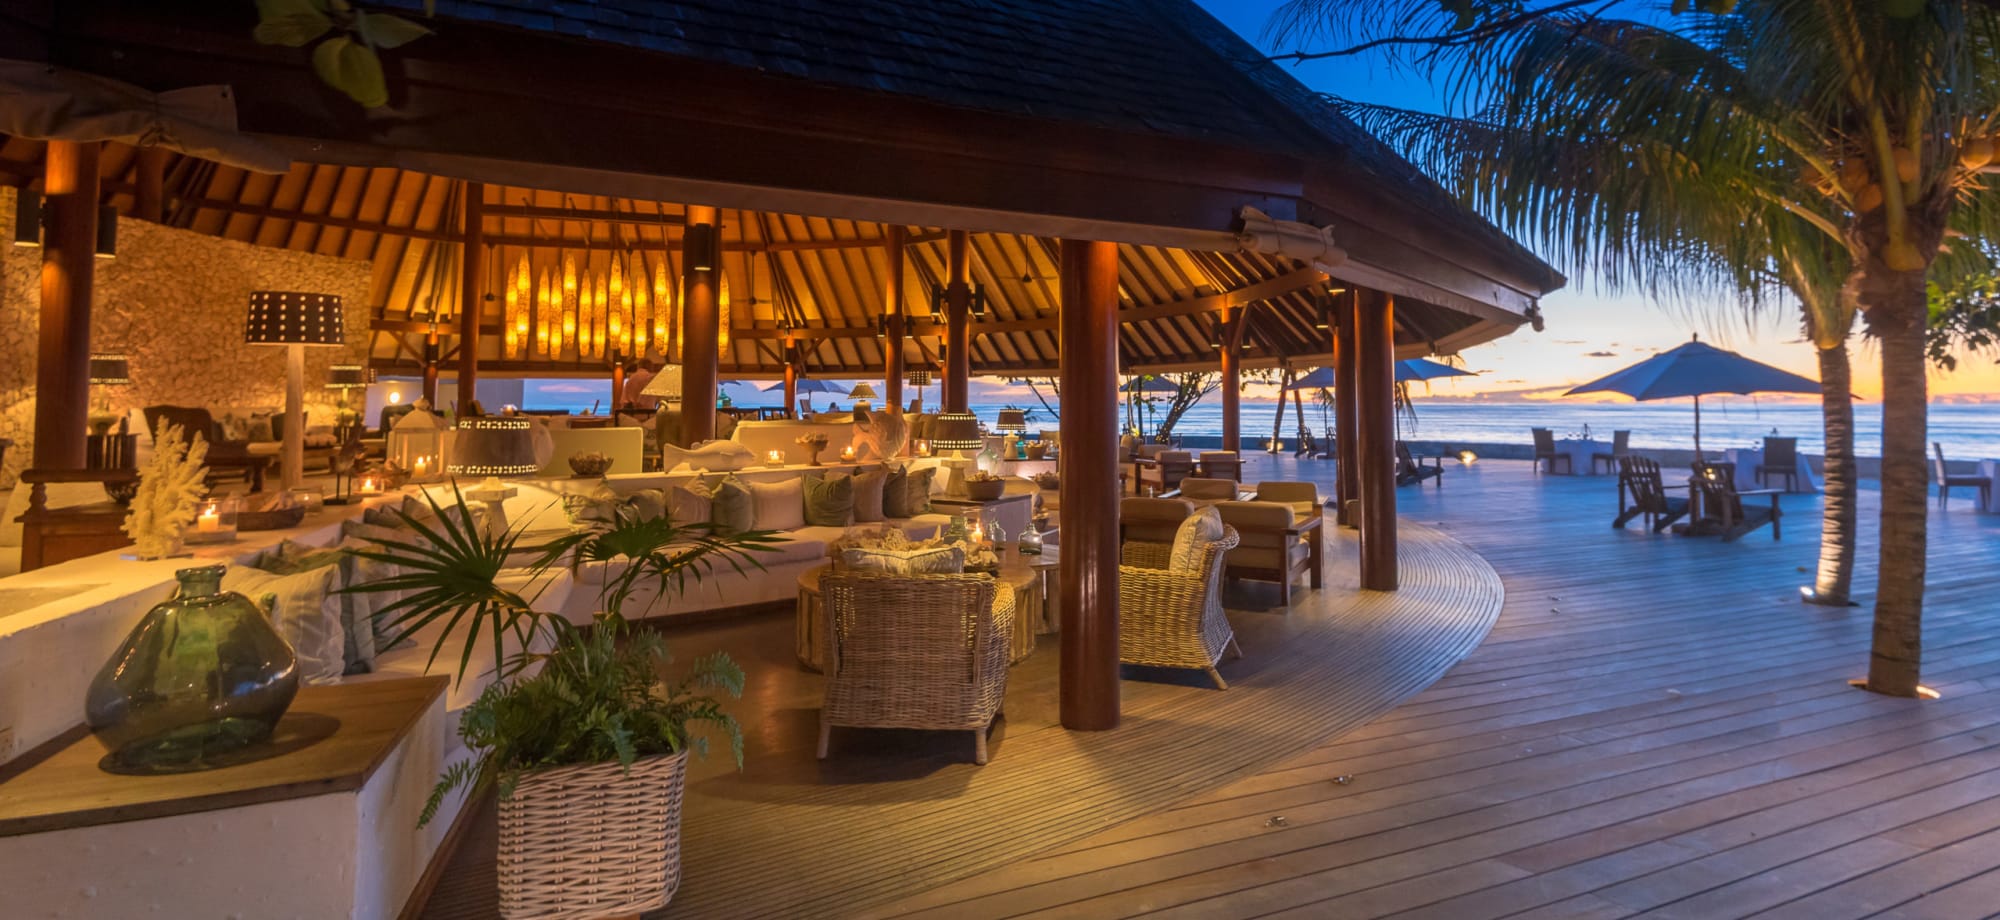 Denis_Private_Island_Restaurant-Lounge_fkhaee